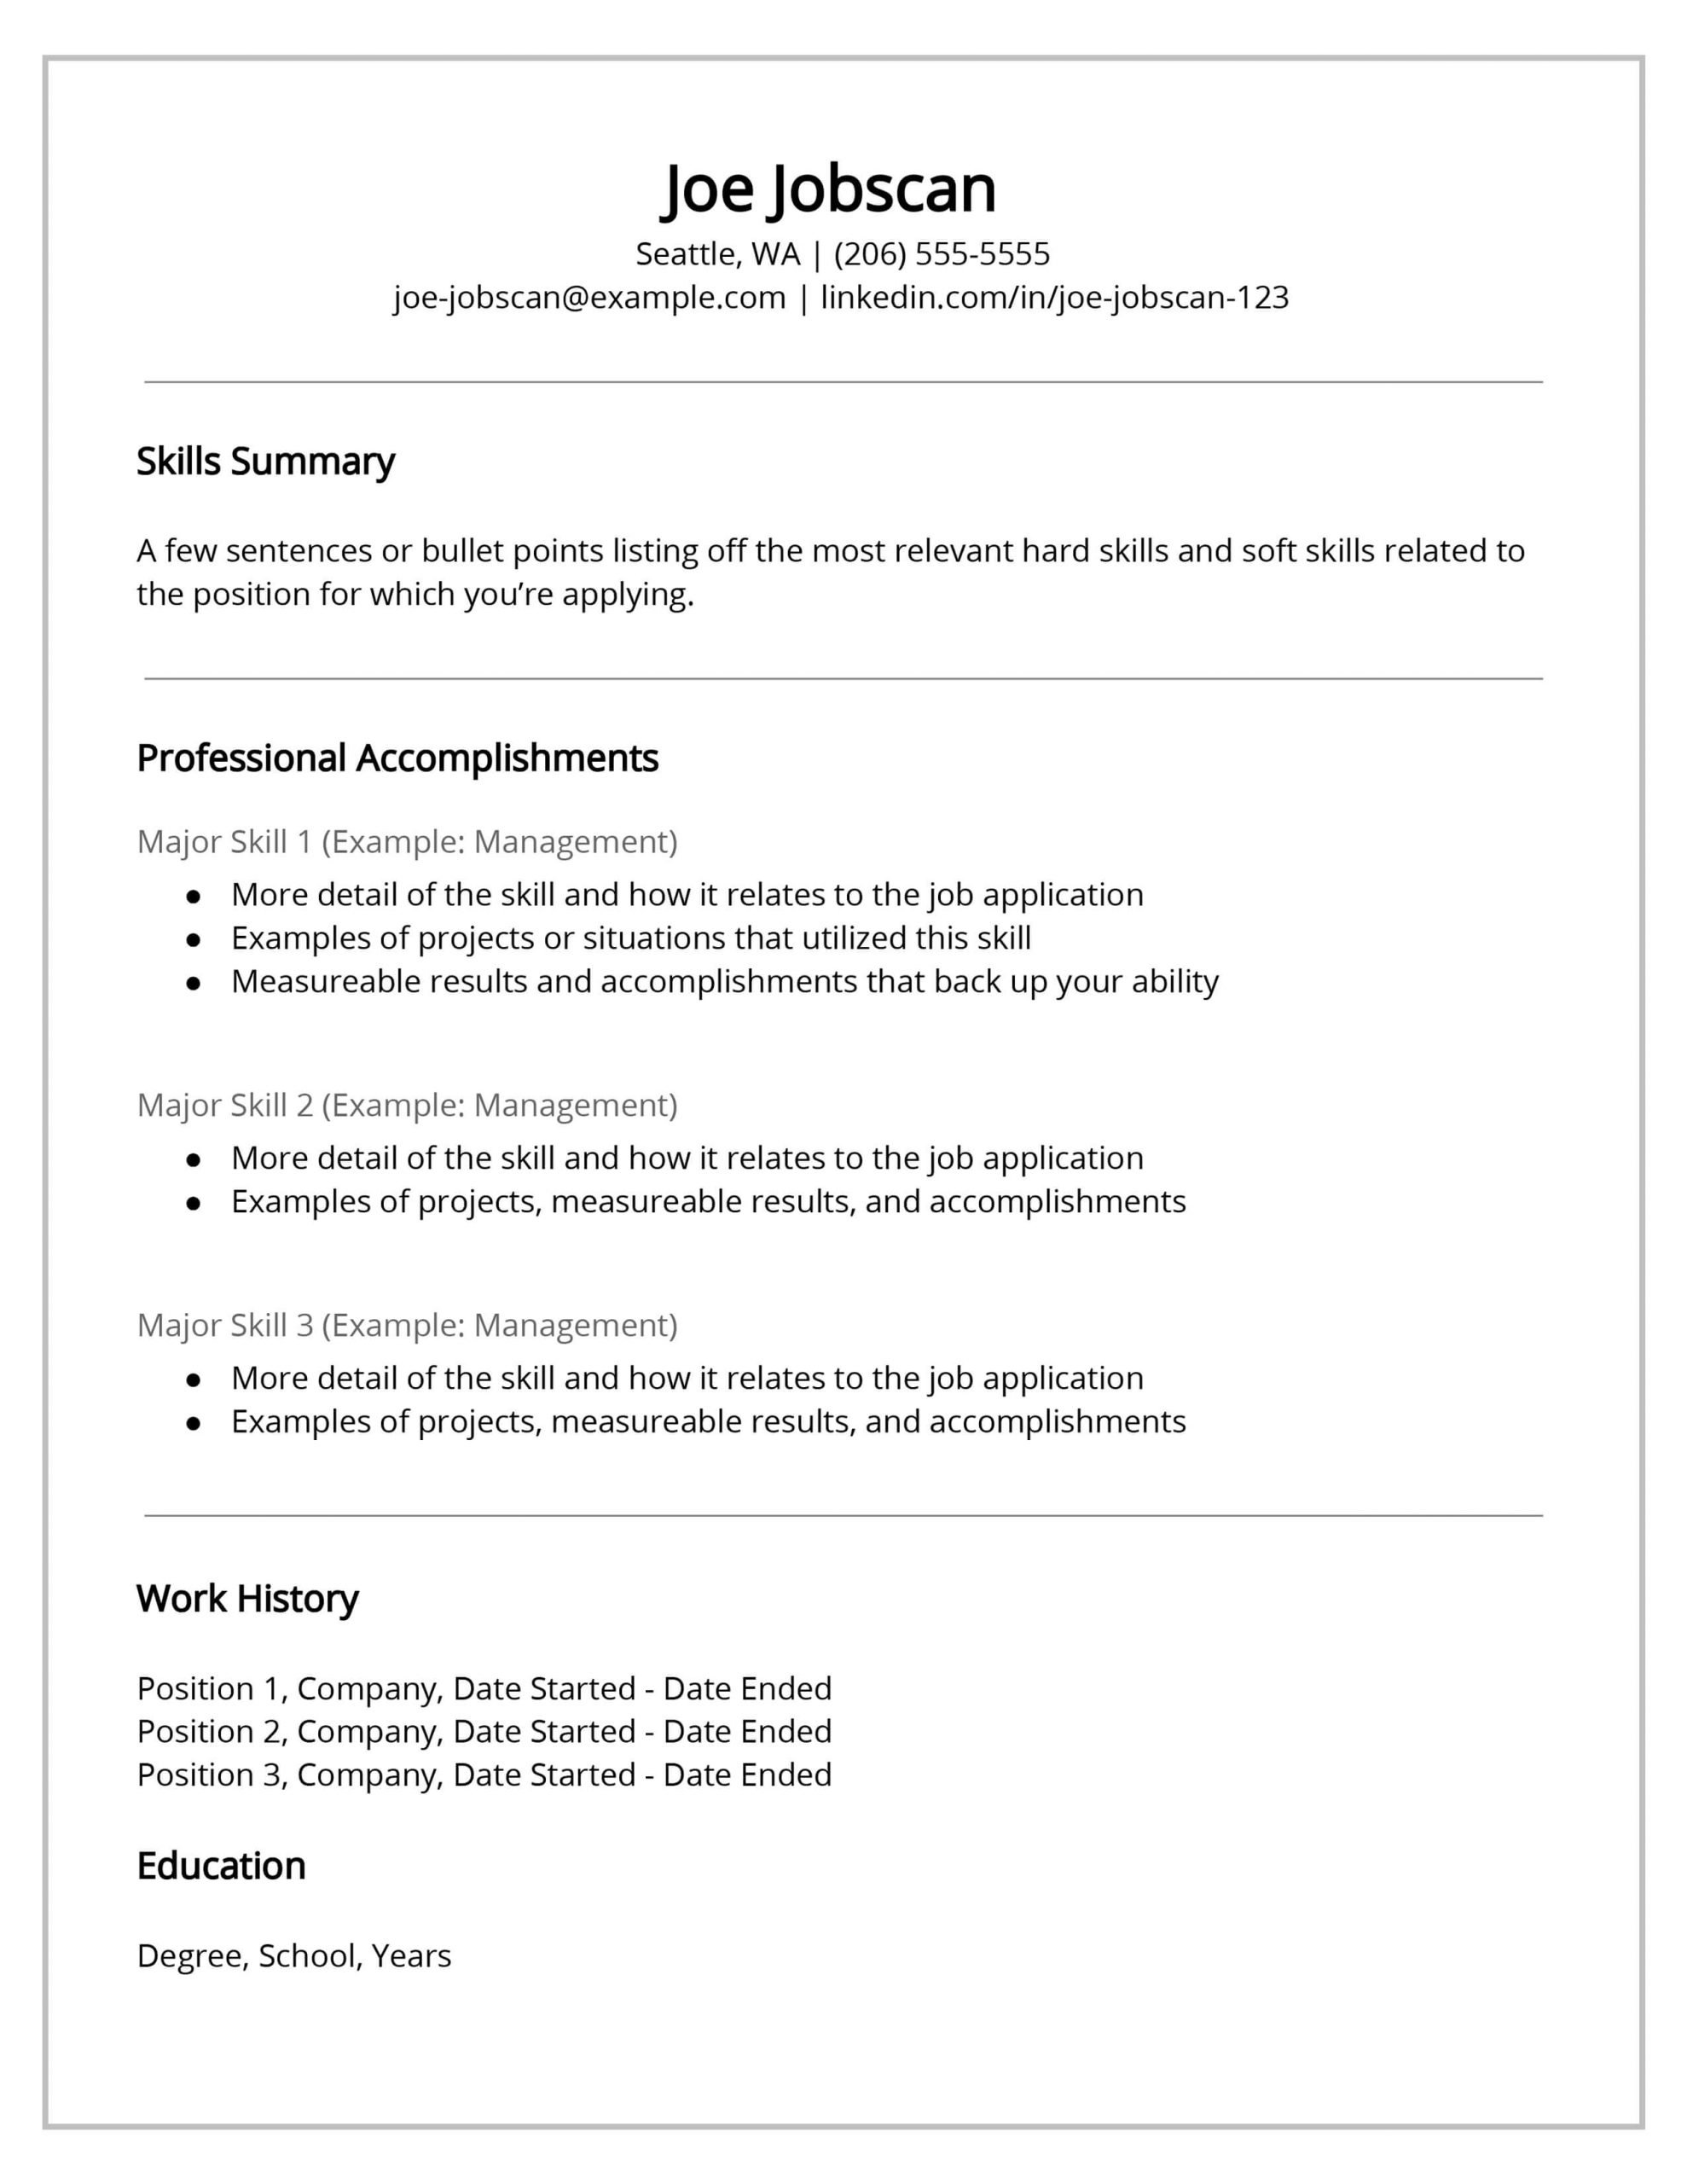 Job Resume Format for 2018